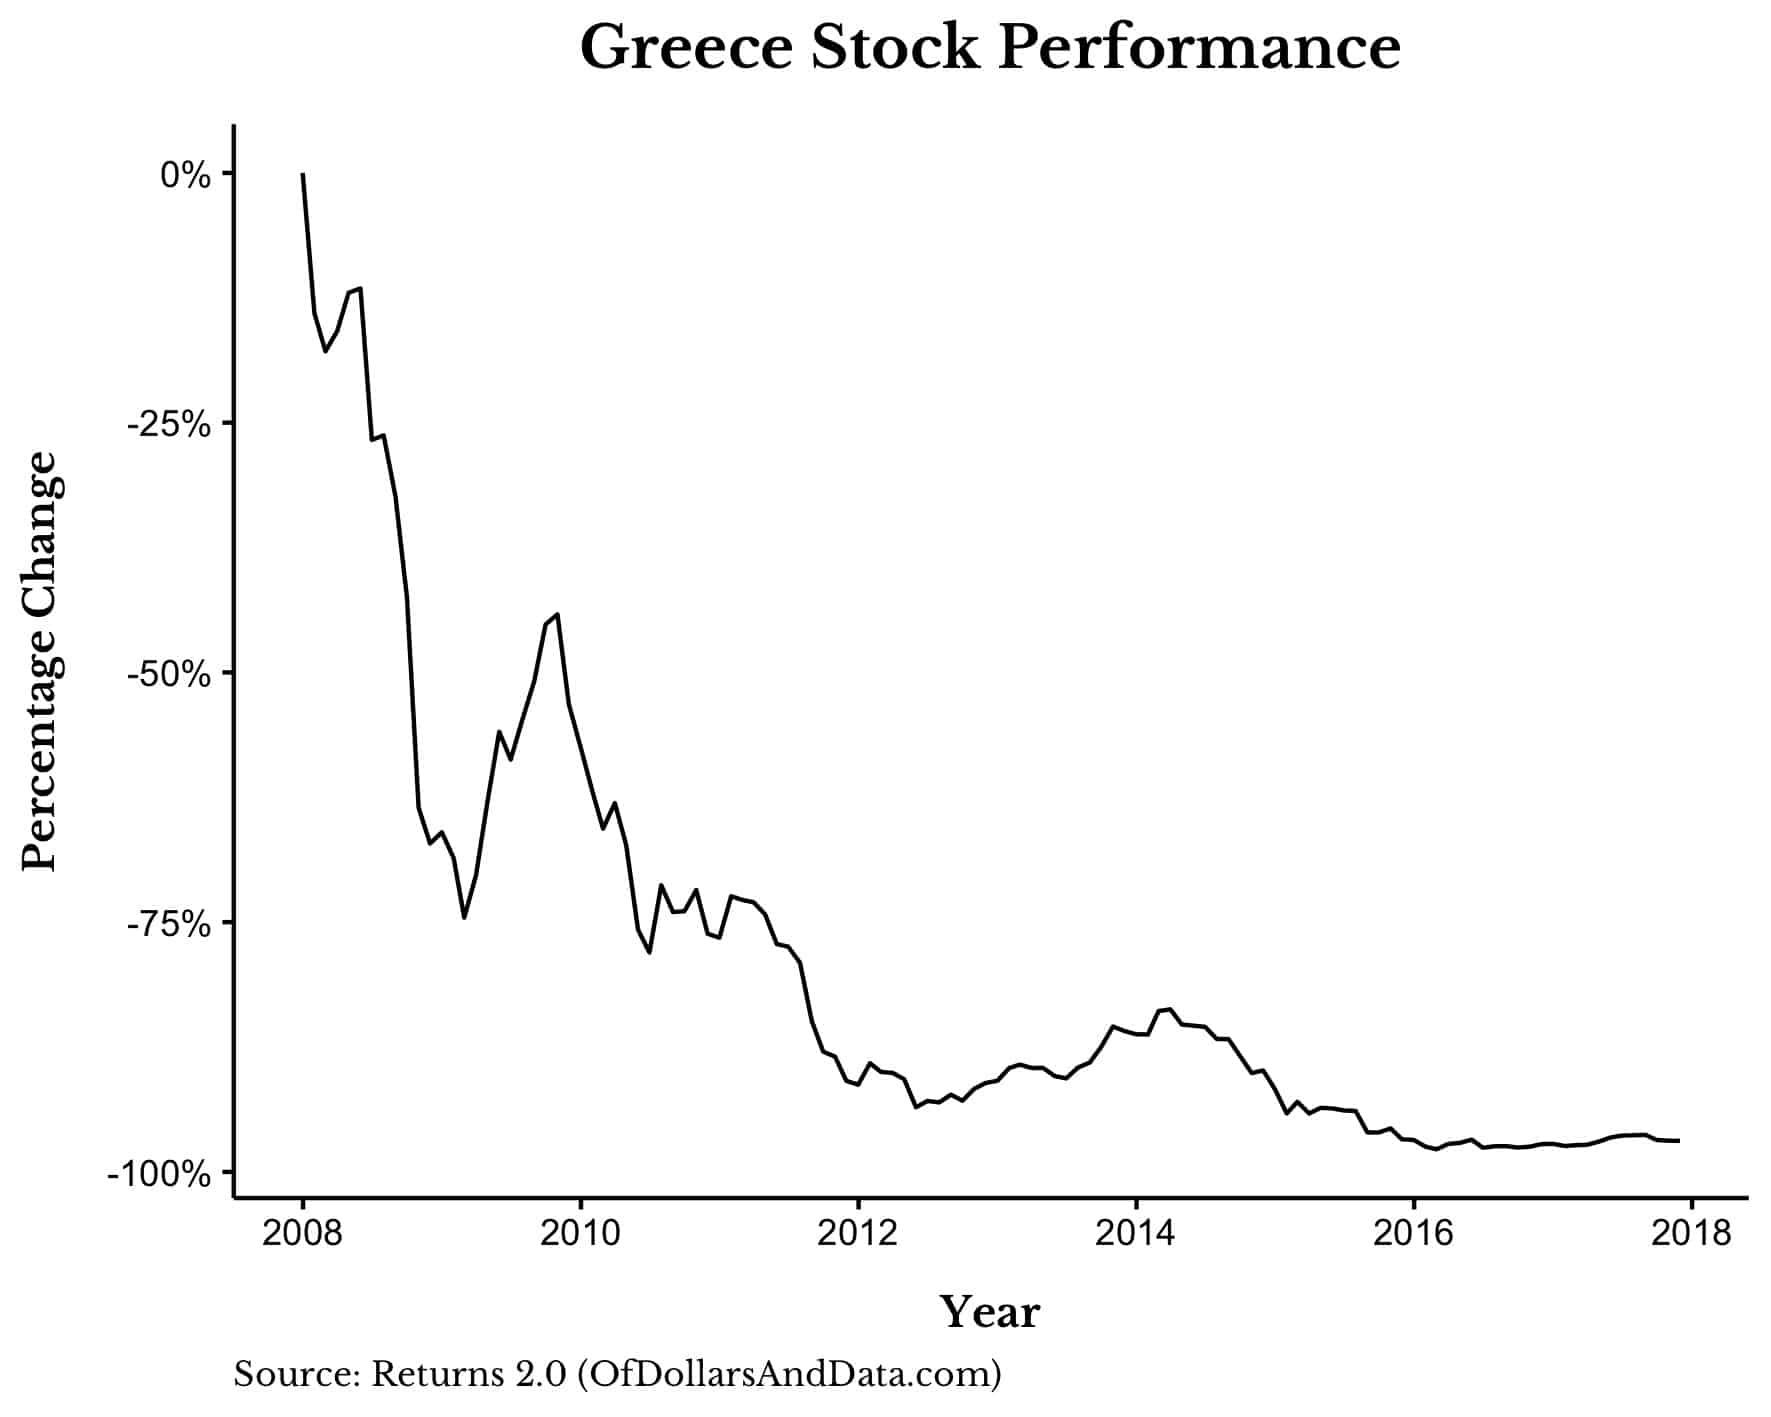 Greece stock market performance 2008-2018